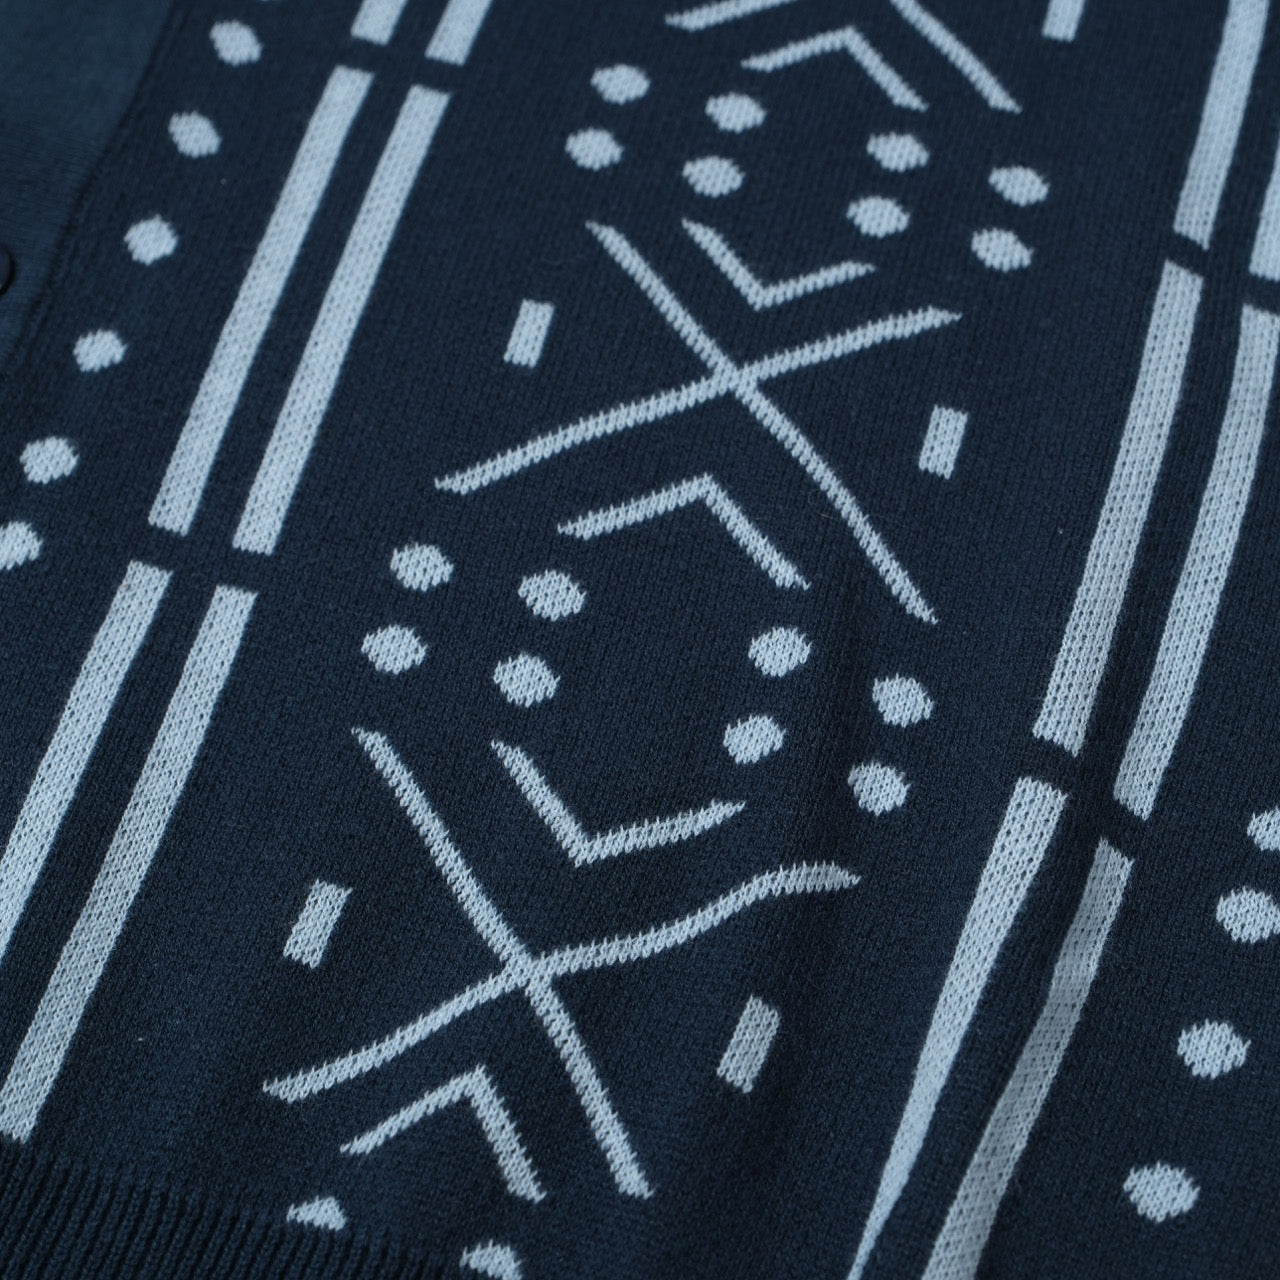 Men's Blue Geometric Pattern Knitted Polo